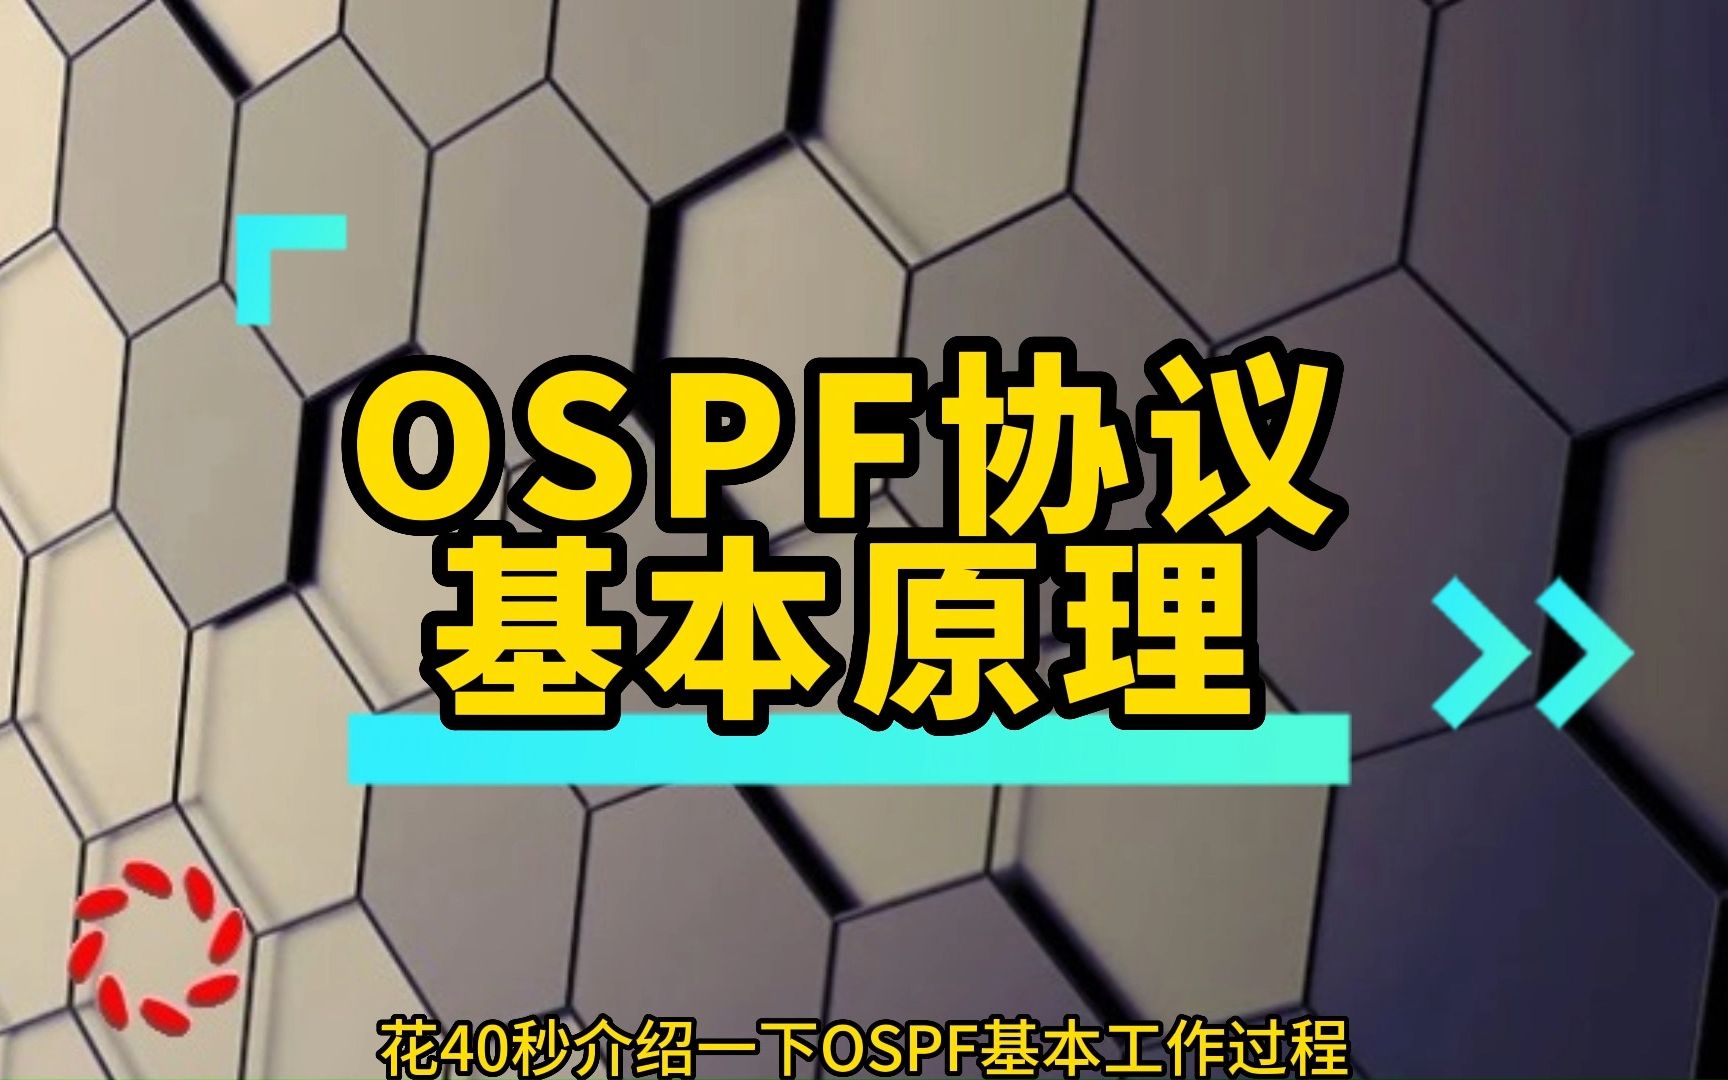 OSPF协议基本原理